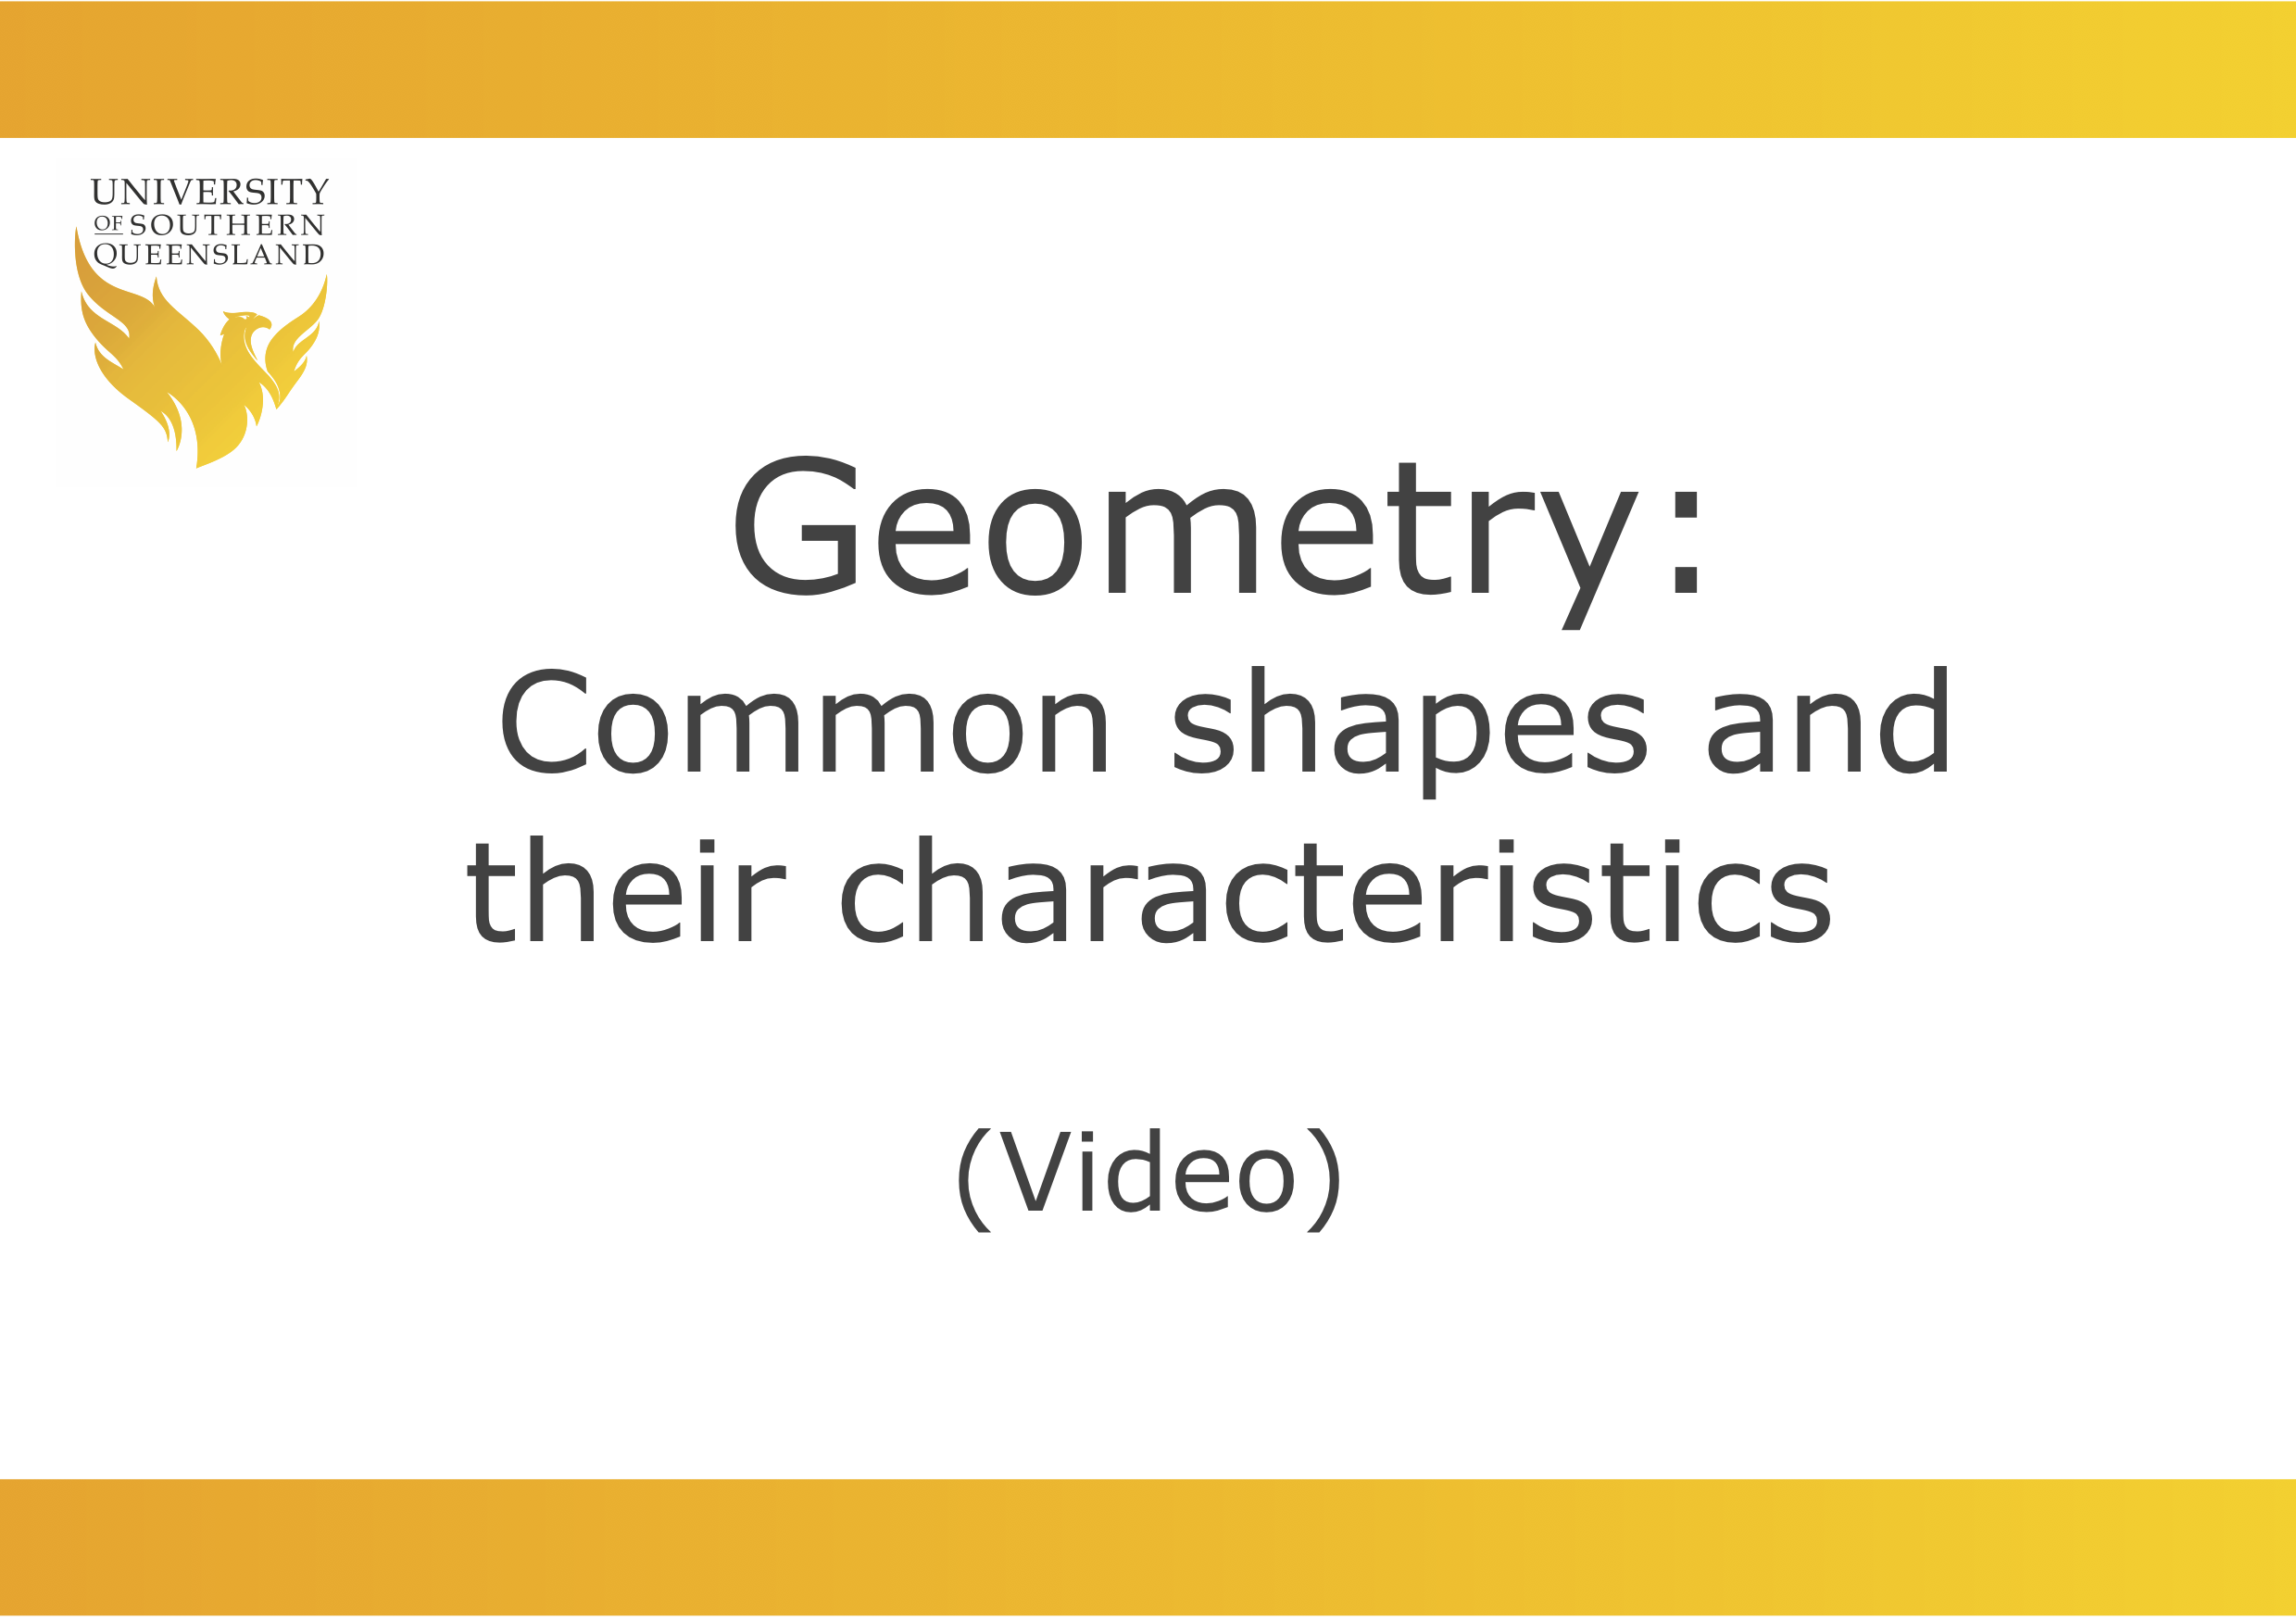 geometry-image